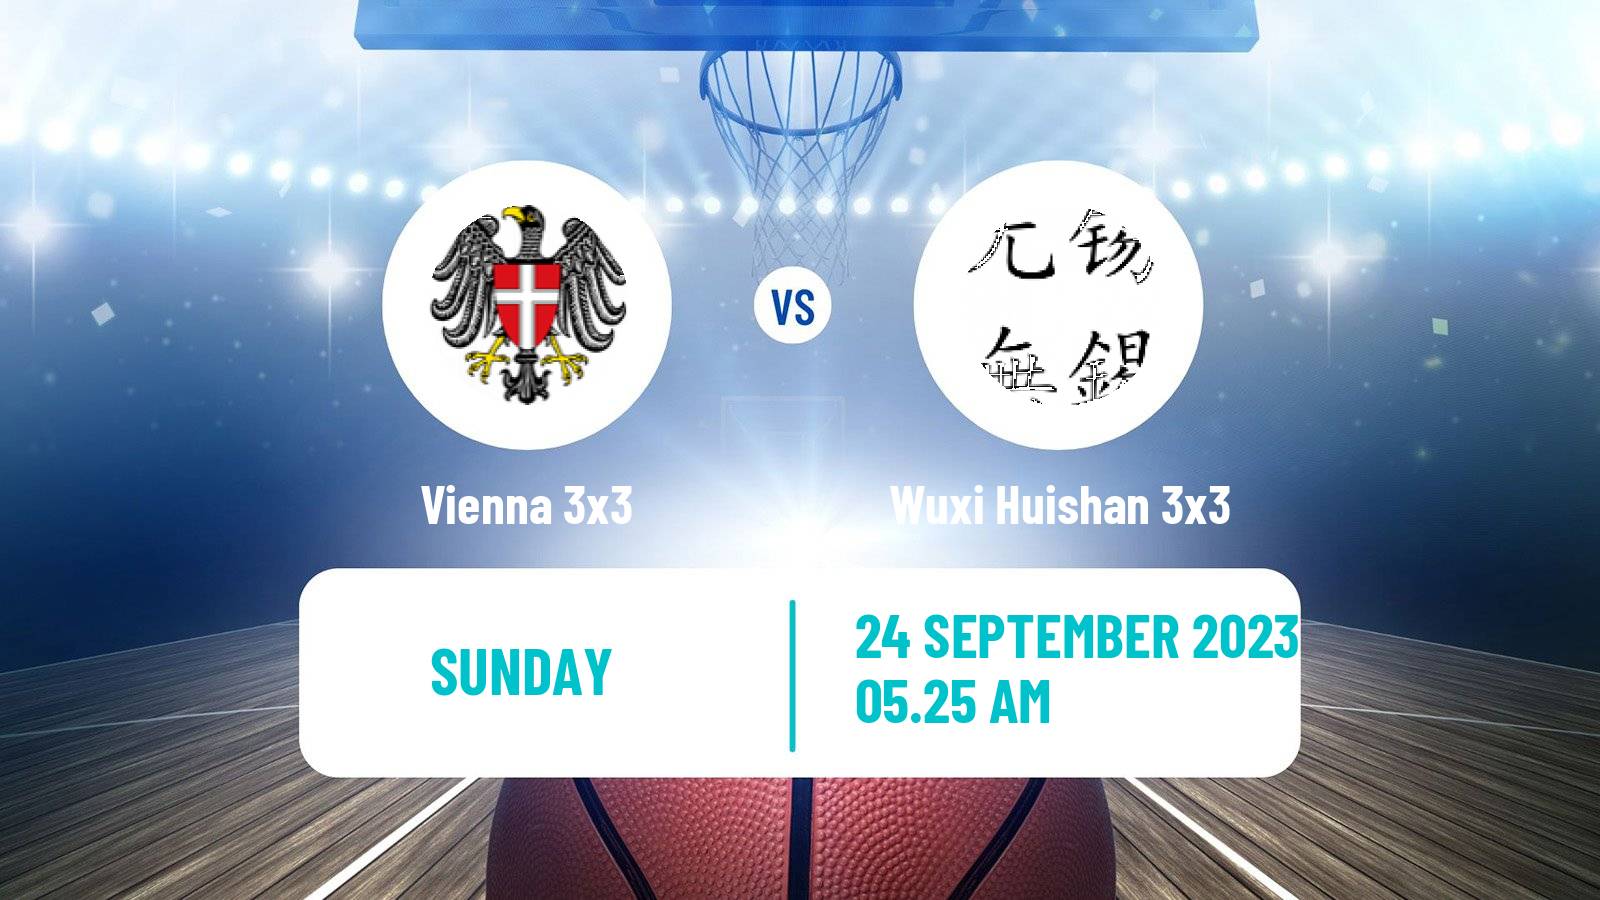 Basketball World Tour Сebu 3x3 Vienna 3x3 - Wuxi Huishan 3x3